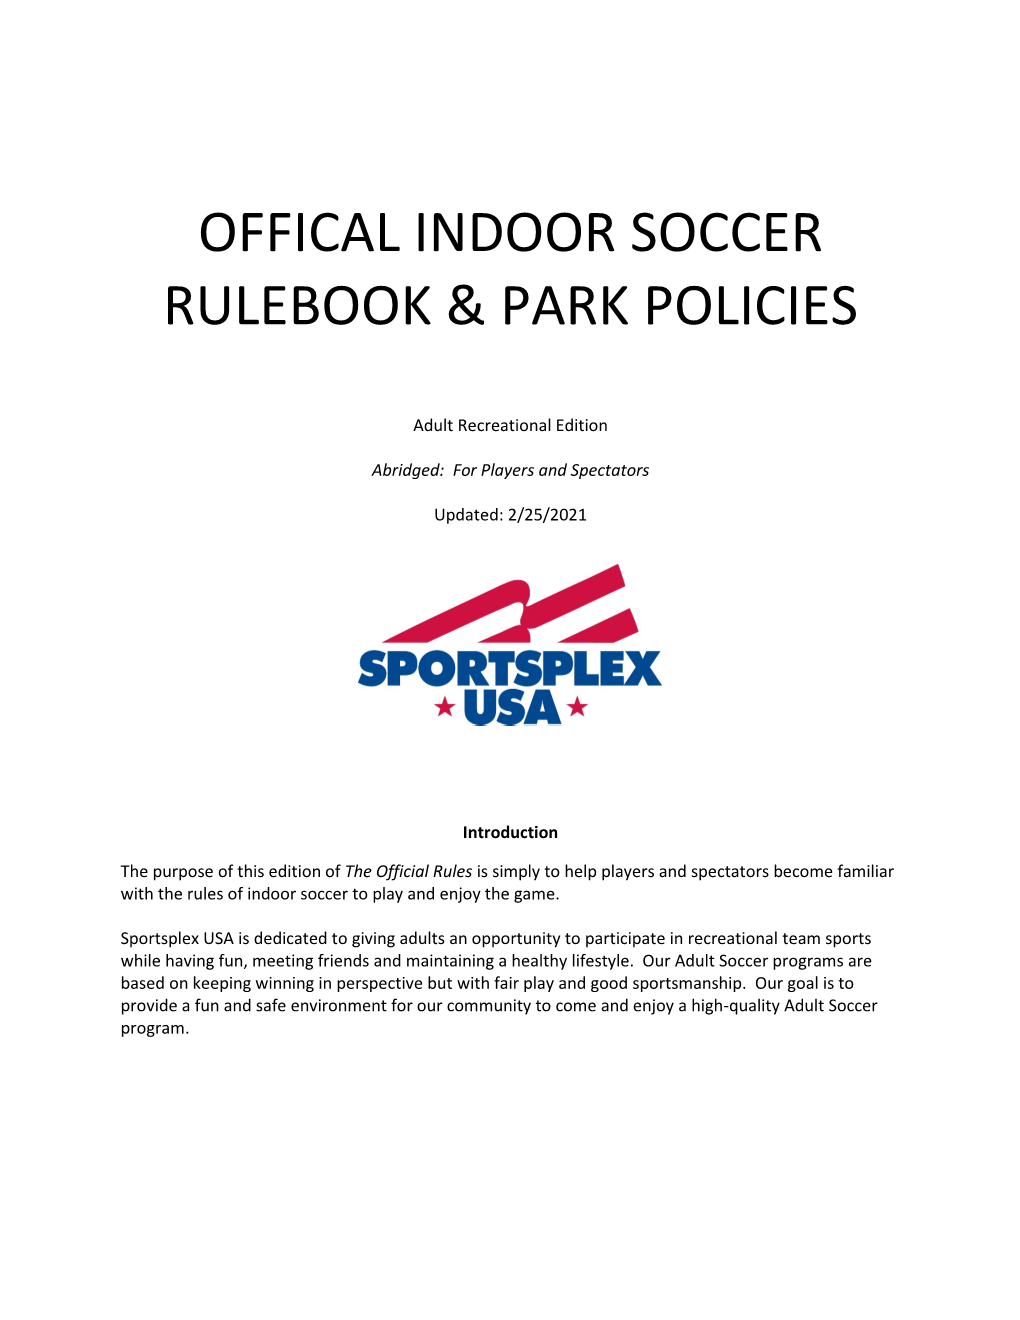 Offical Indoor Soccer Rulebook & Park Policies